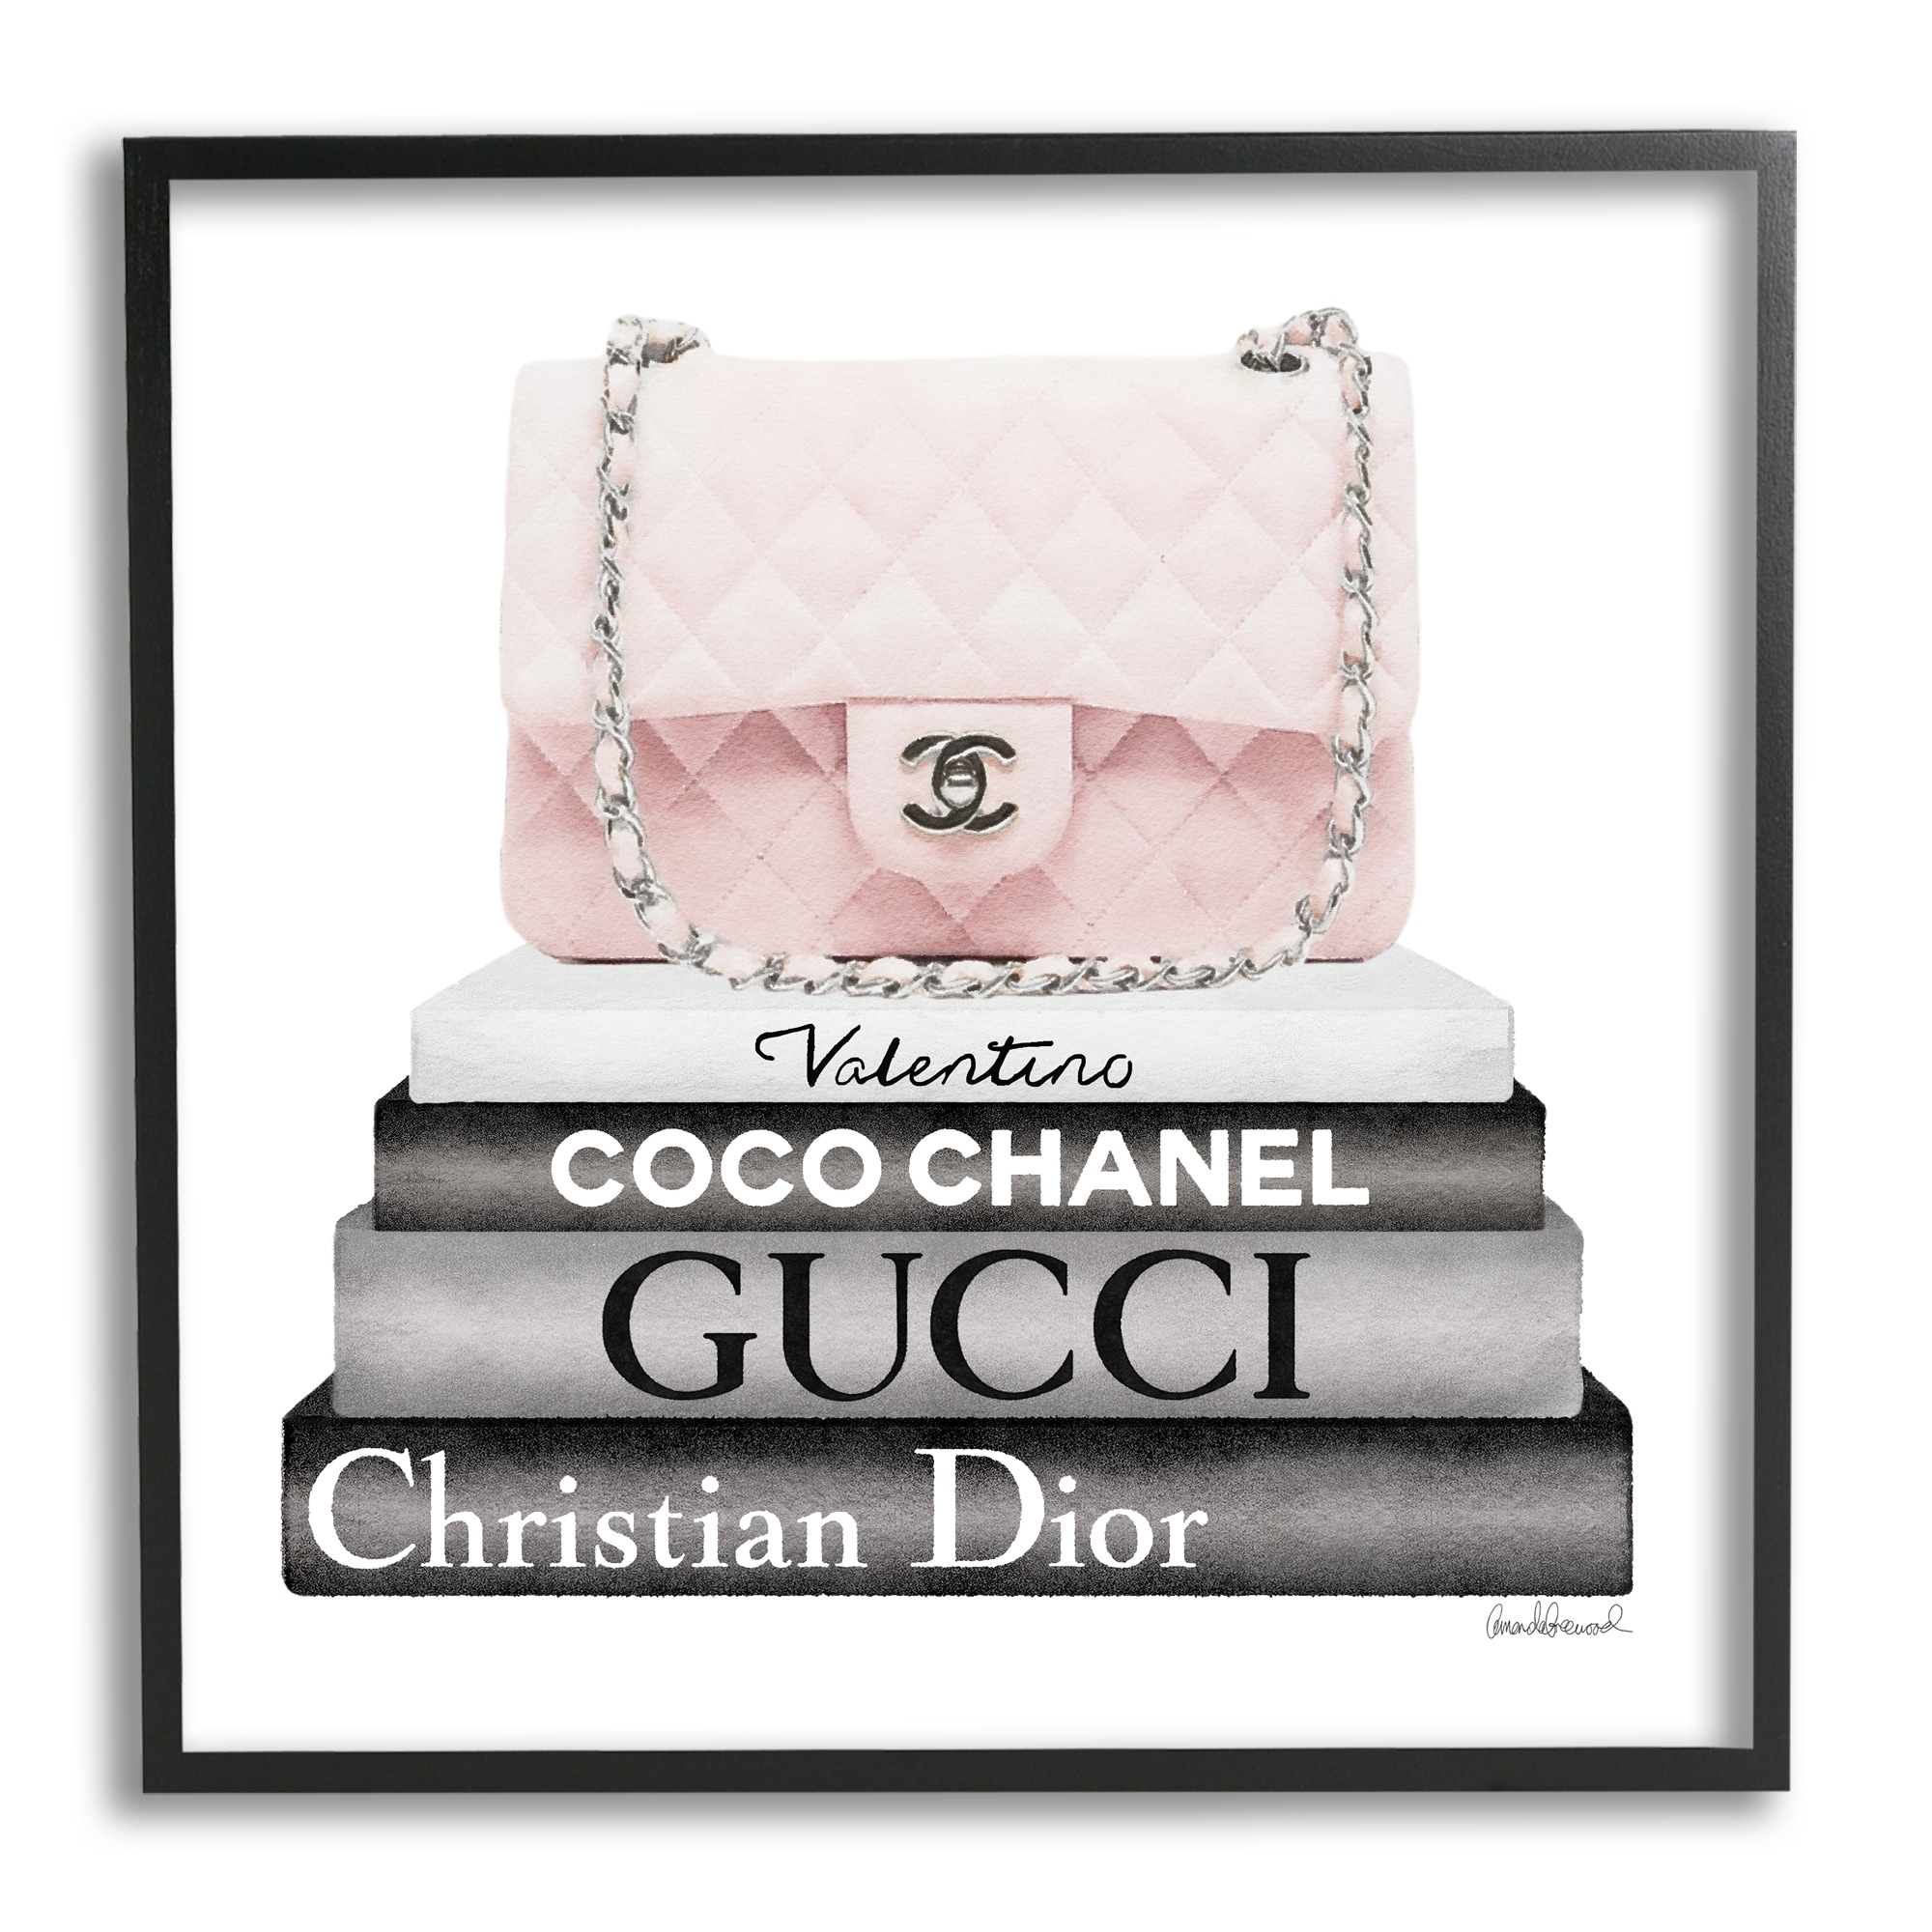 Stupell Industries Elegant Glam Fashion Floral Bag on Bookstack Throw Pillow  18 x 18